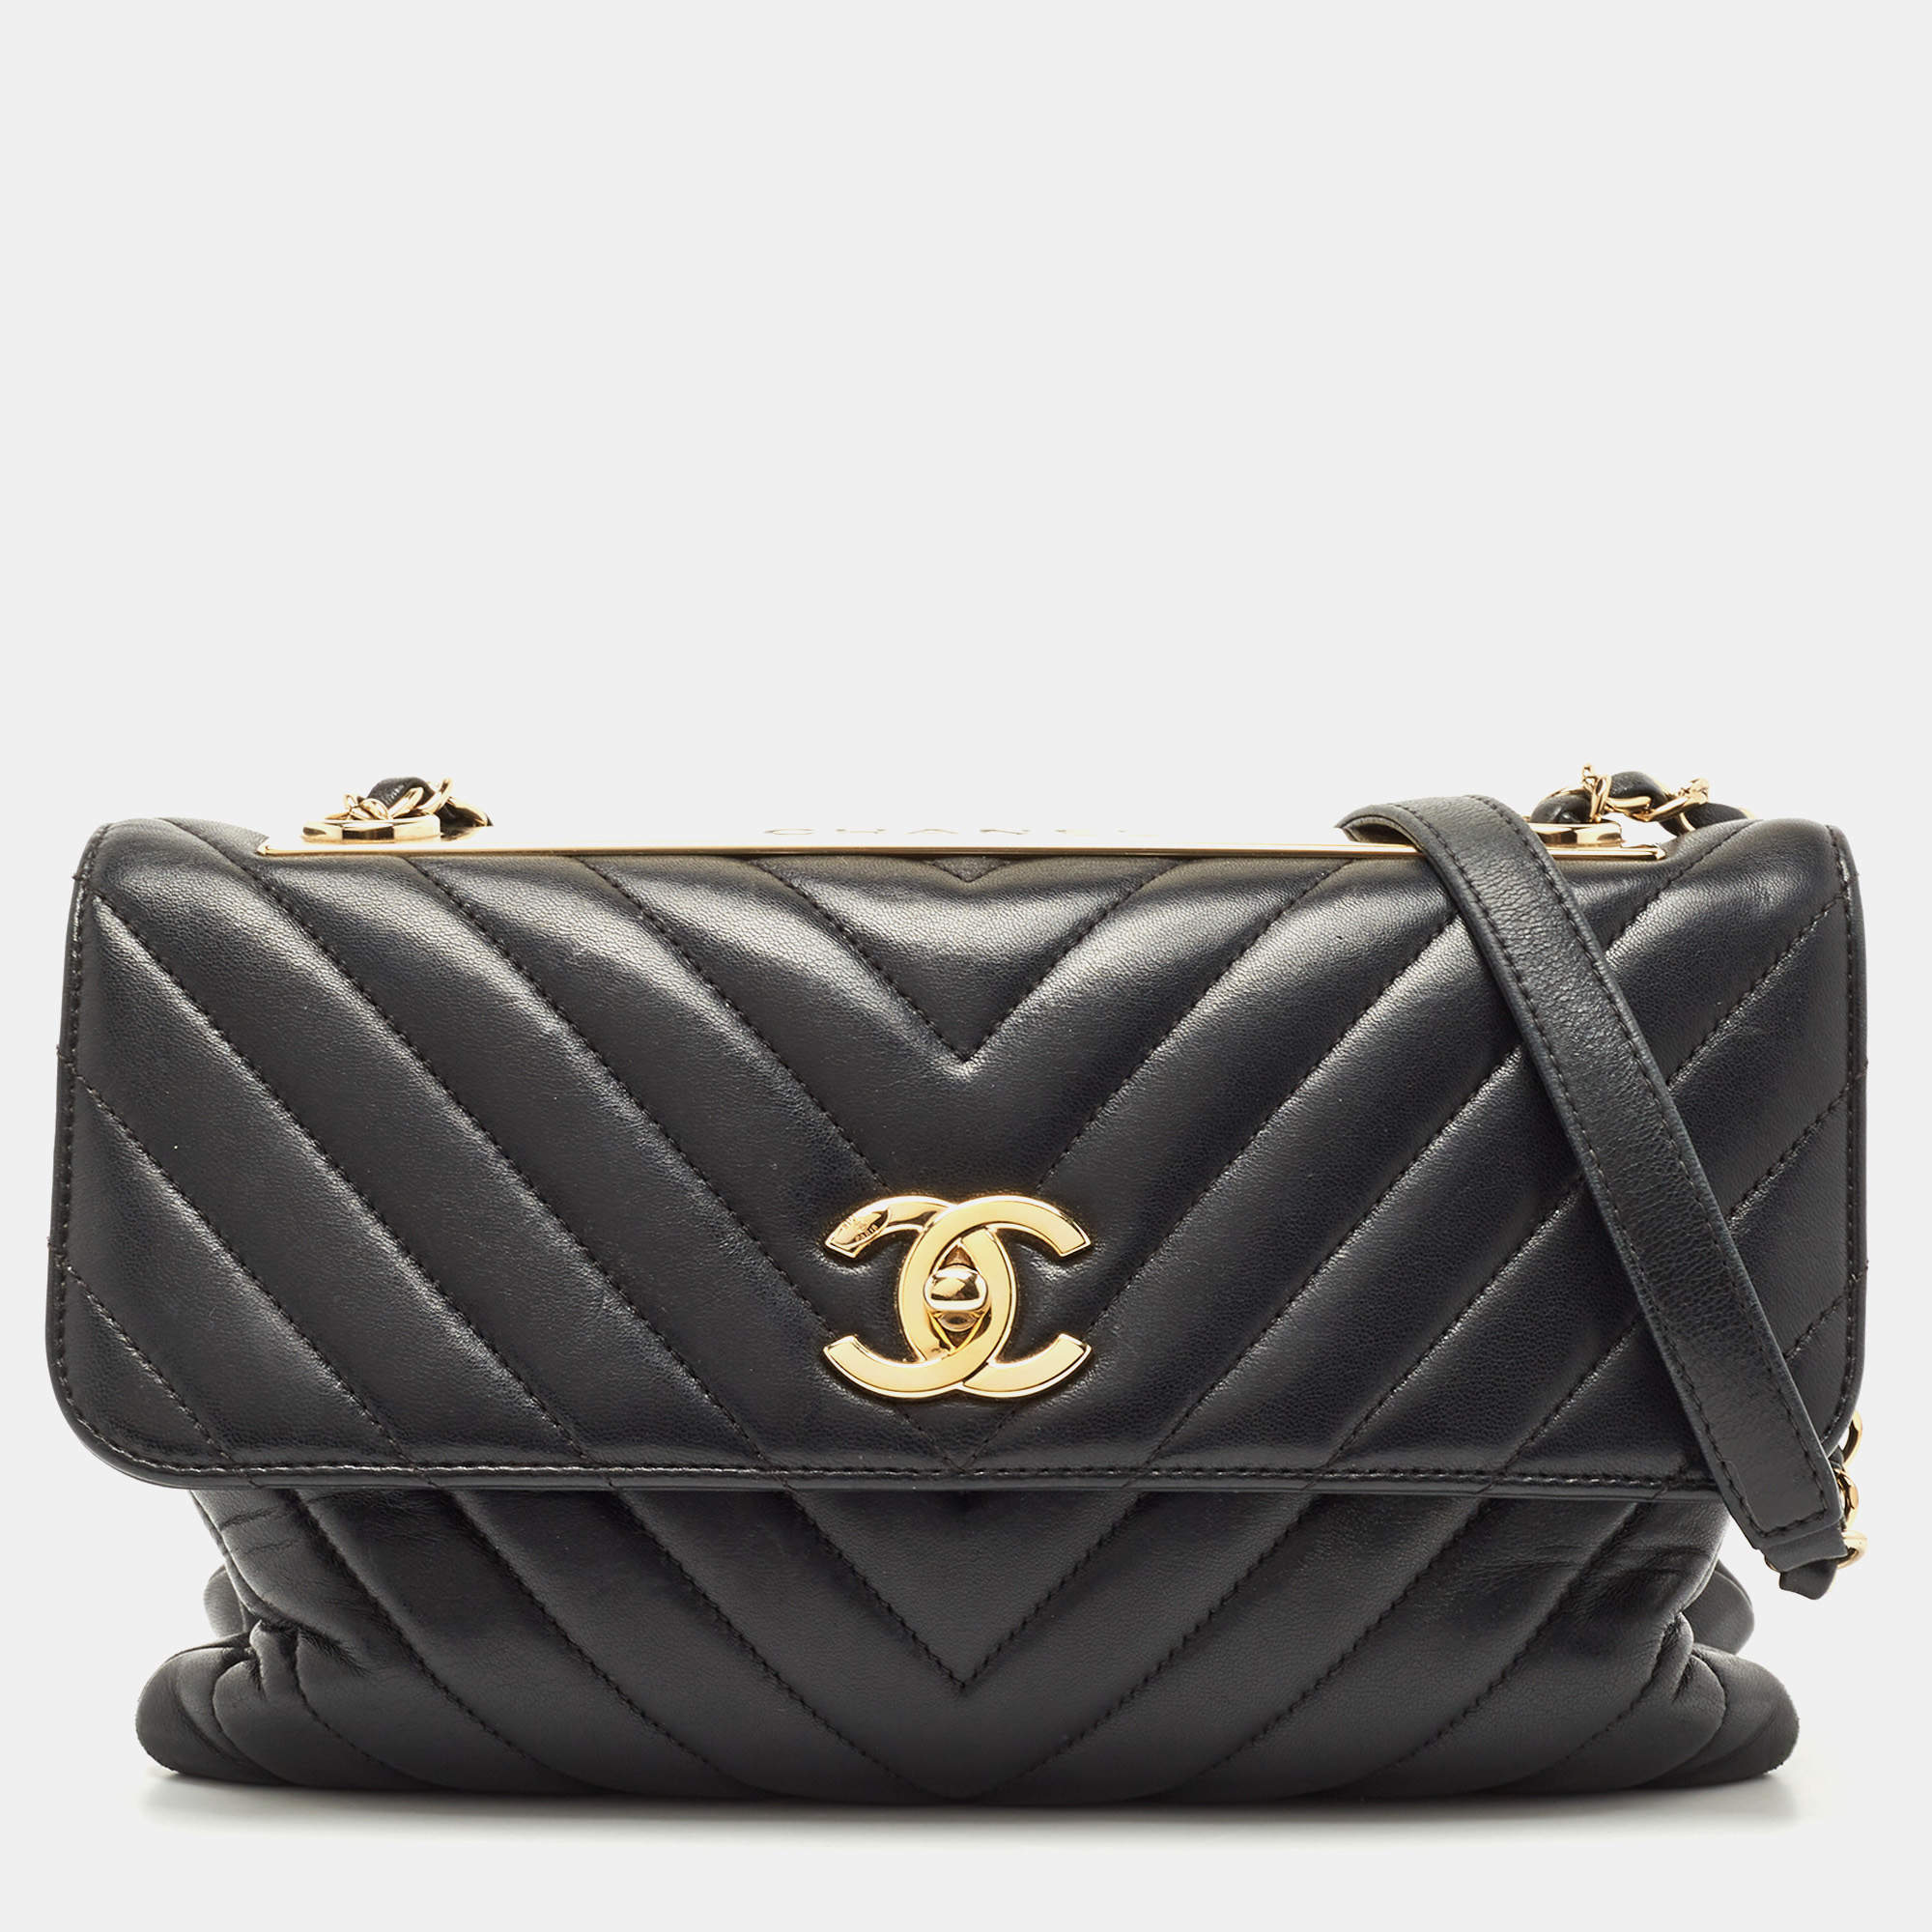 Chanel Chevron Flap Bag in Black Antique Gold orangeporter